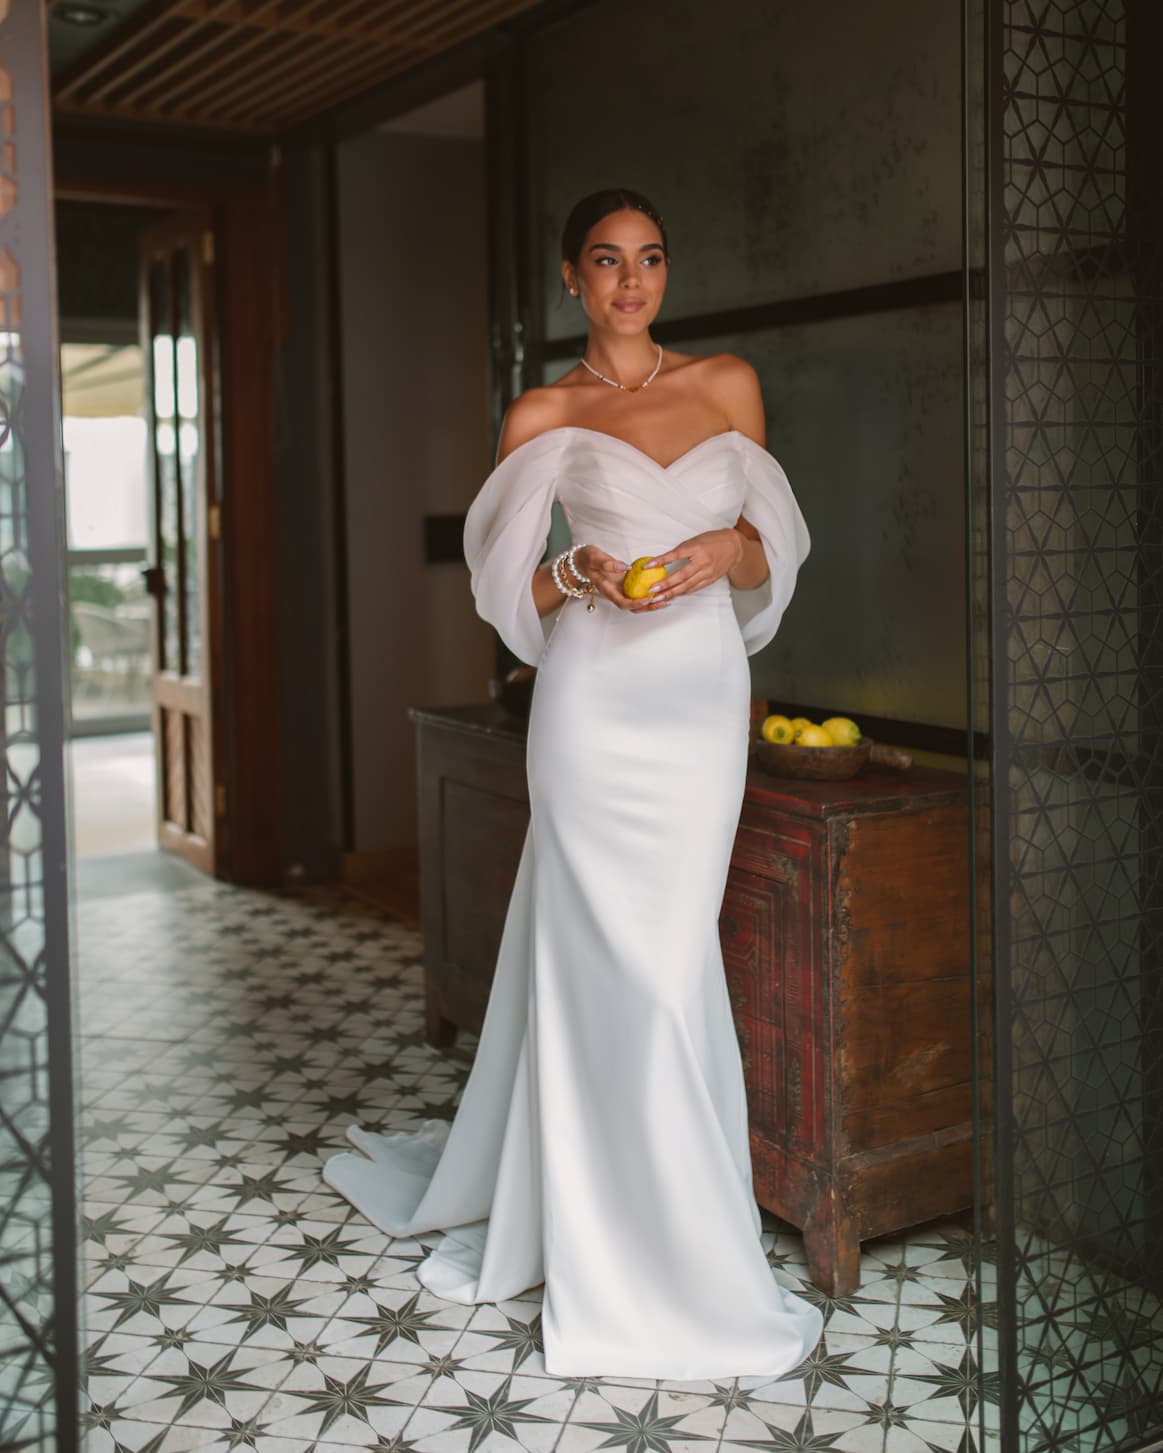 https://www.dellamore.co.nz/wp-content/uploads/2023/02/vetta-wedding-dress-with-organza-sleeves-from-rara-avis-5.jpg